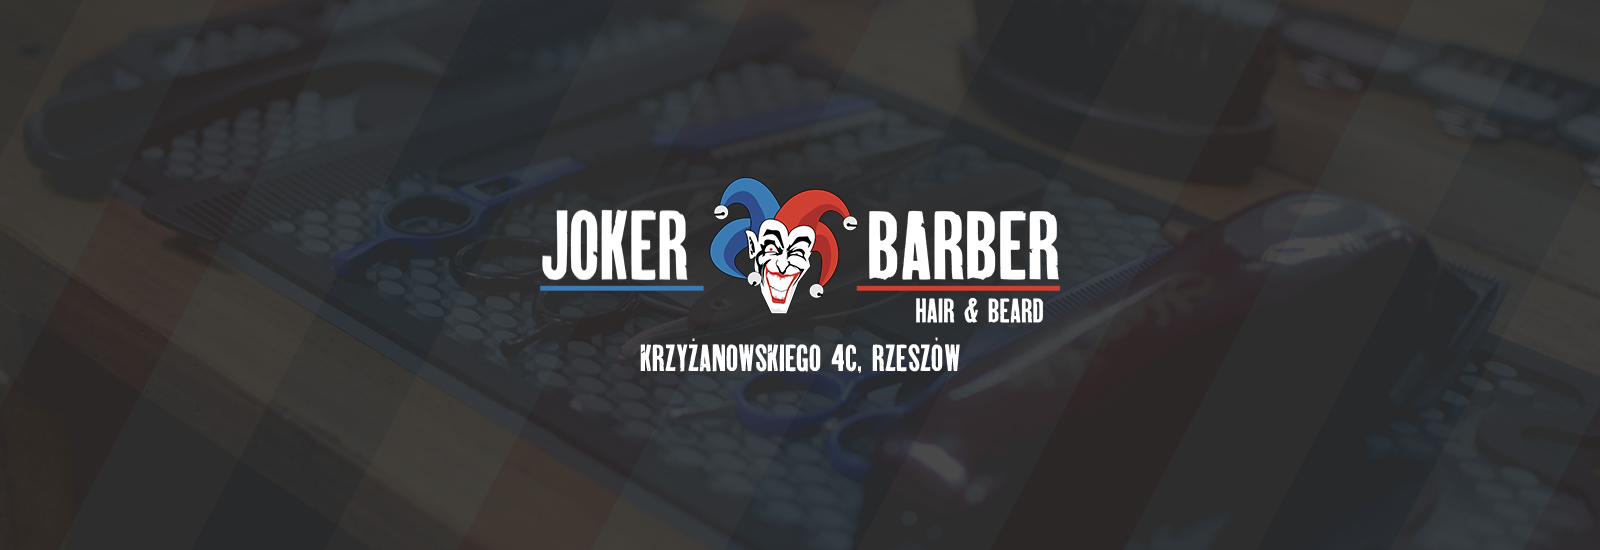 Joker Barber Rzeszów